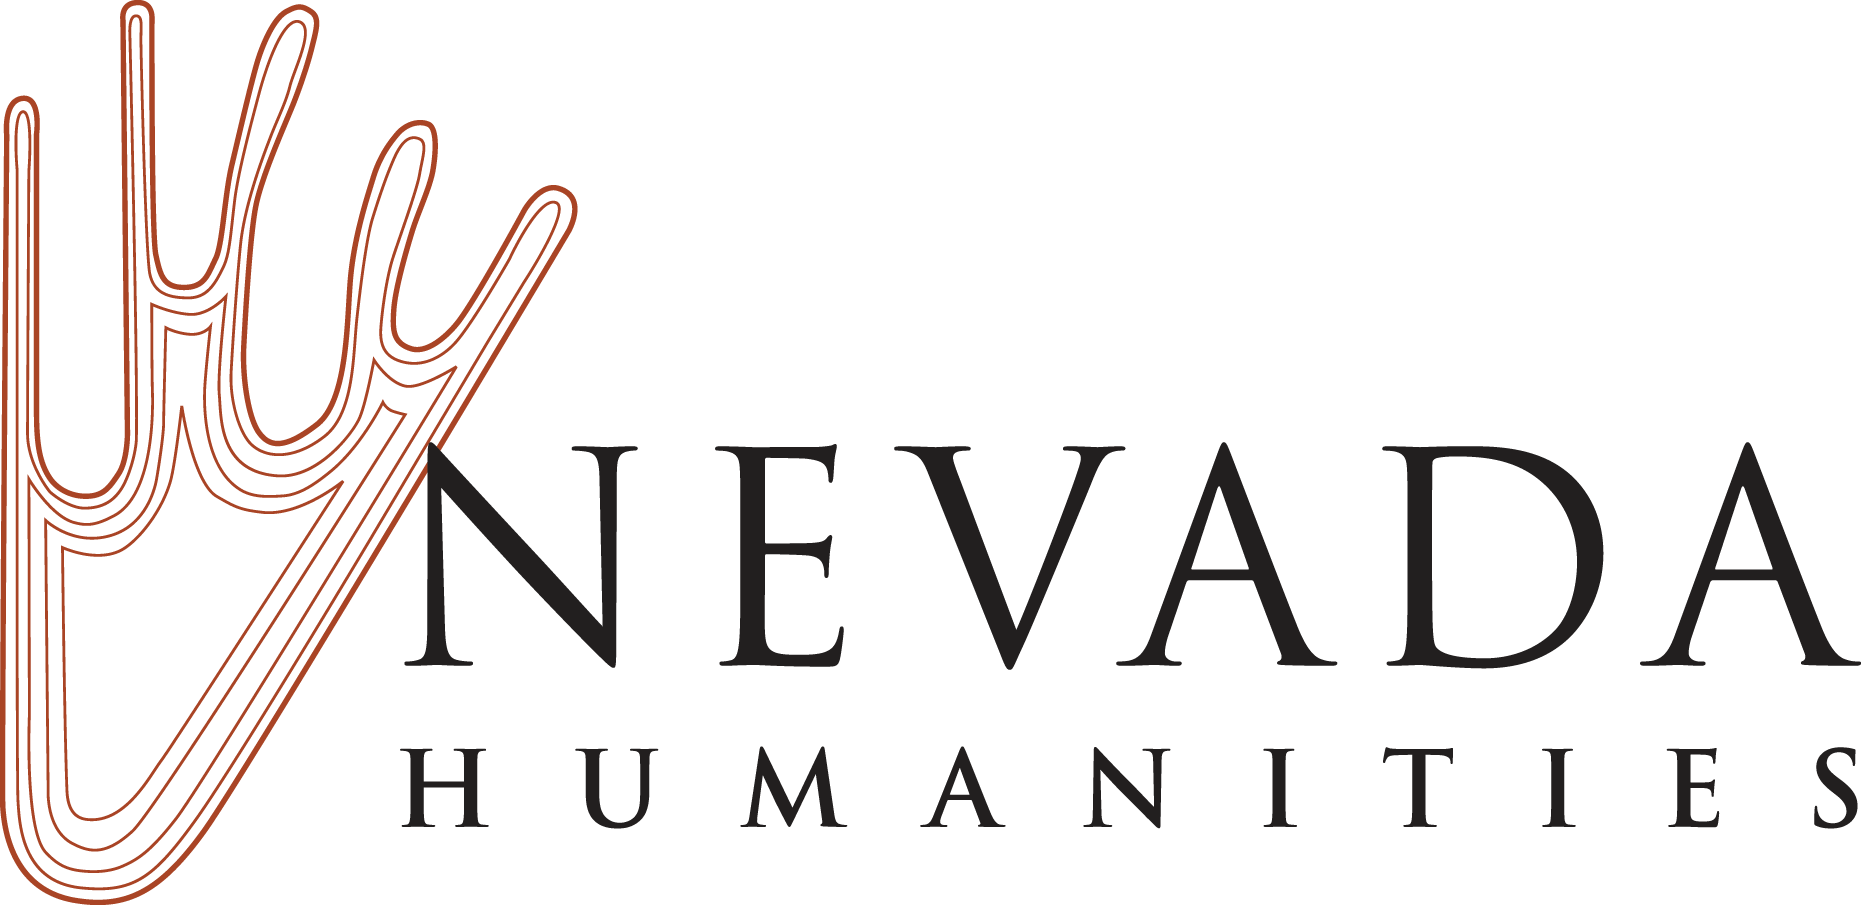 Nevada Humanities logo